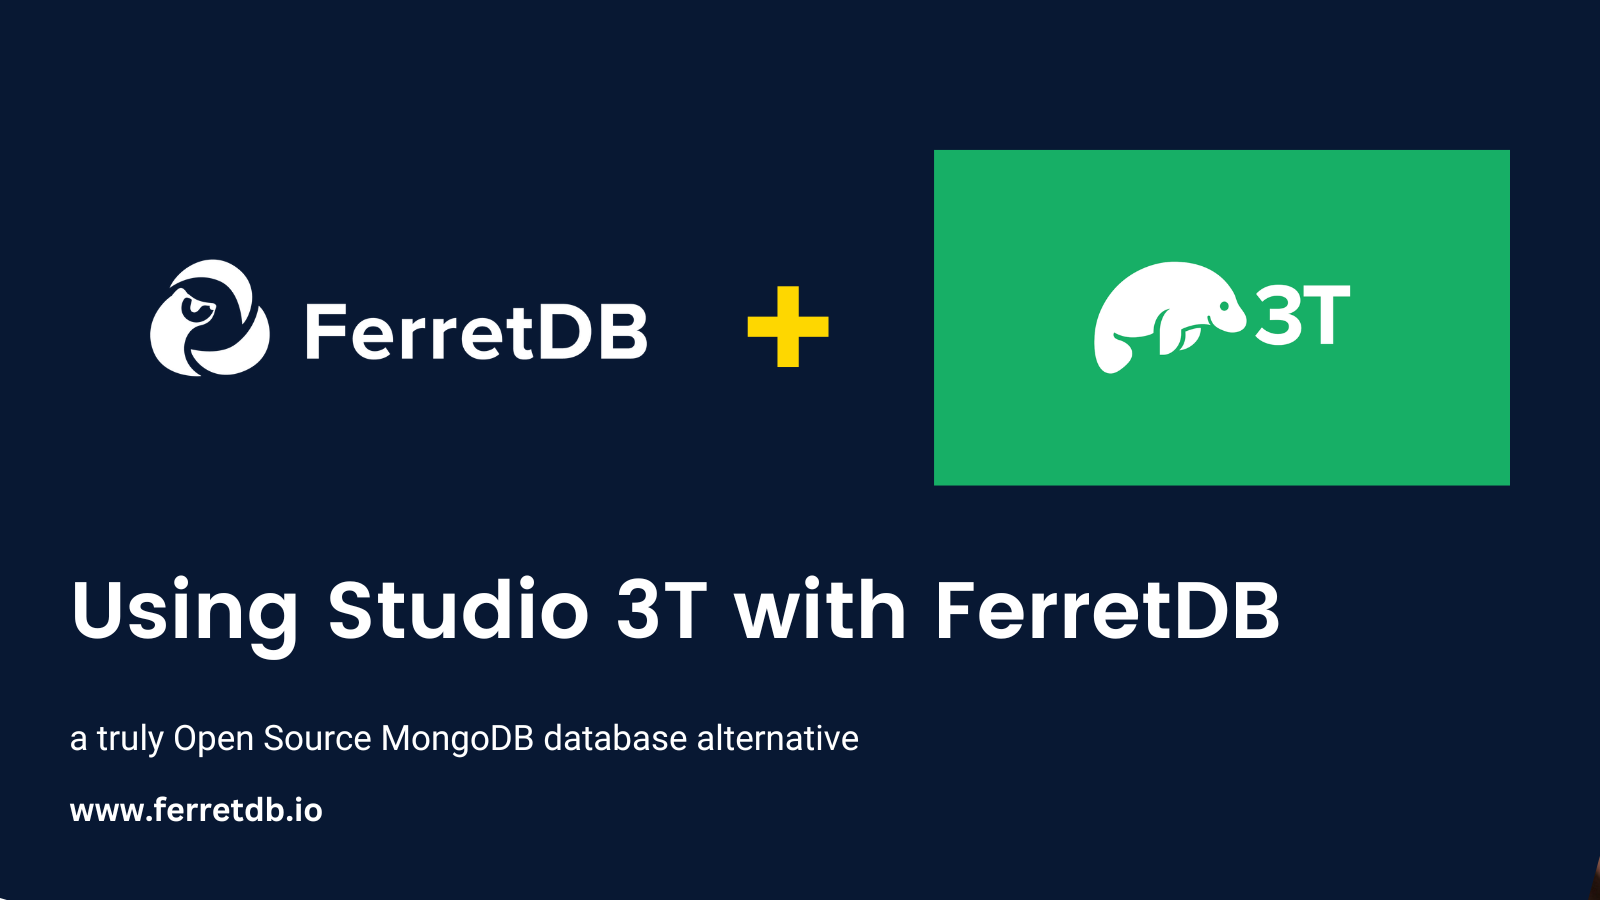 Using FerretDB with Studio 3T